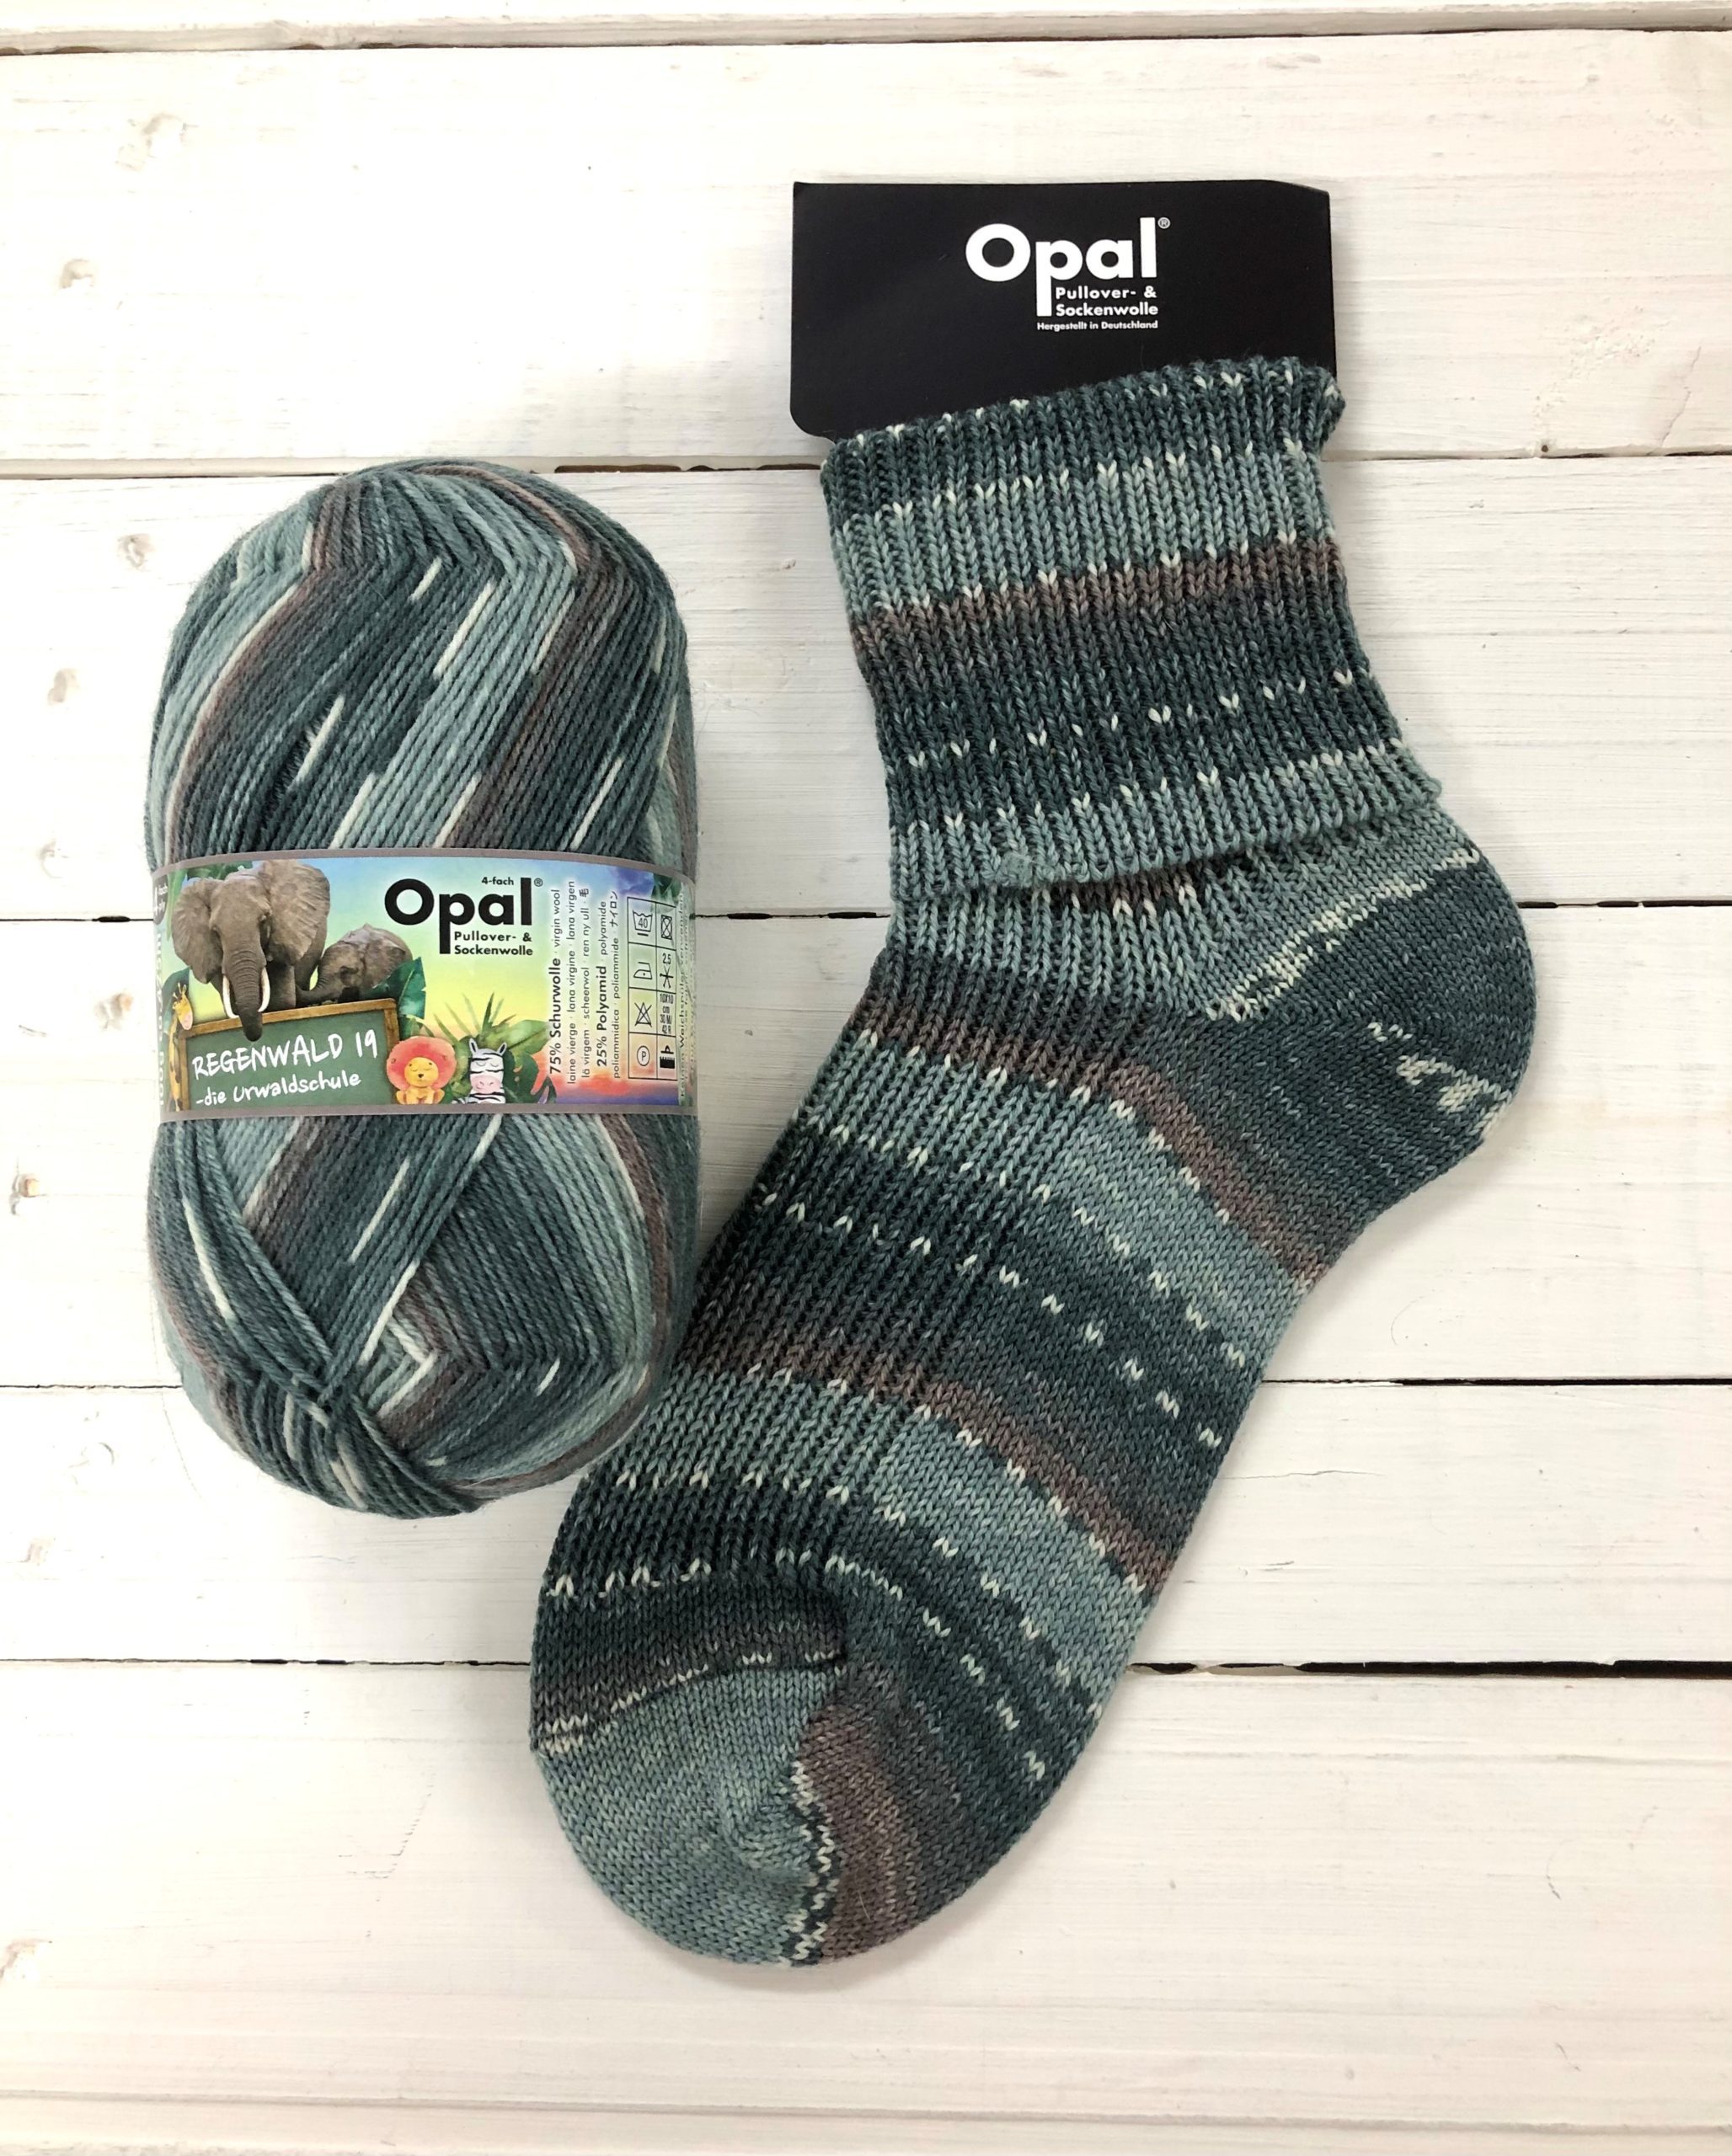 Opal Rainforest 19 - The Jungle School - The Sock Yarn Shop